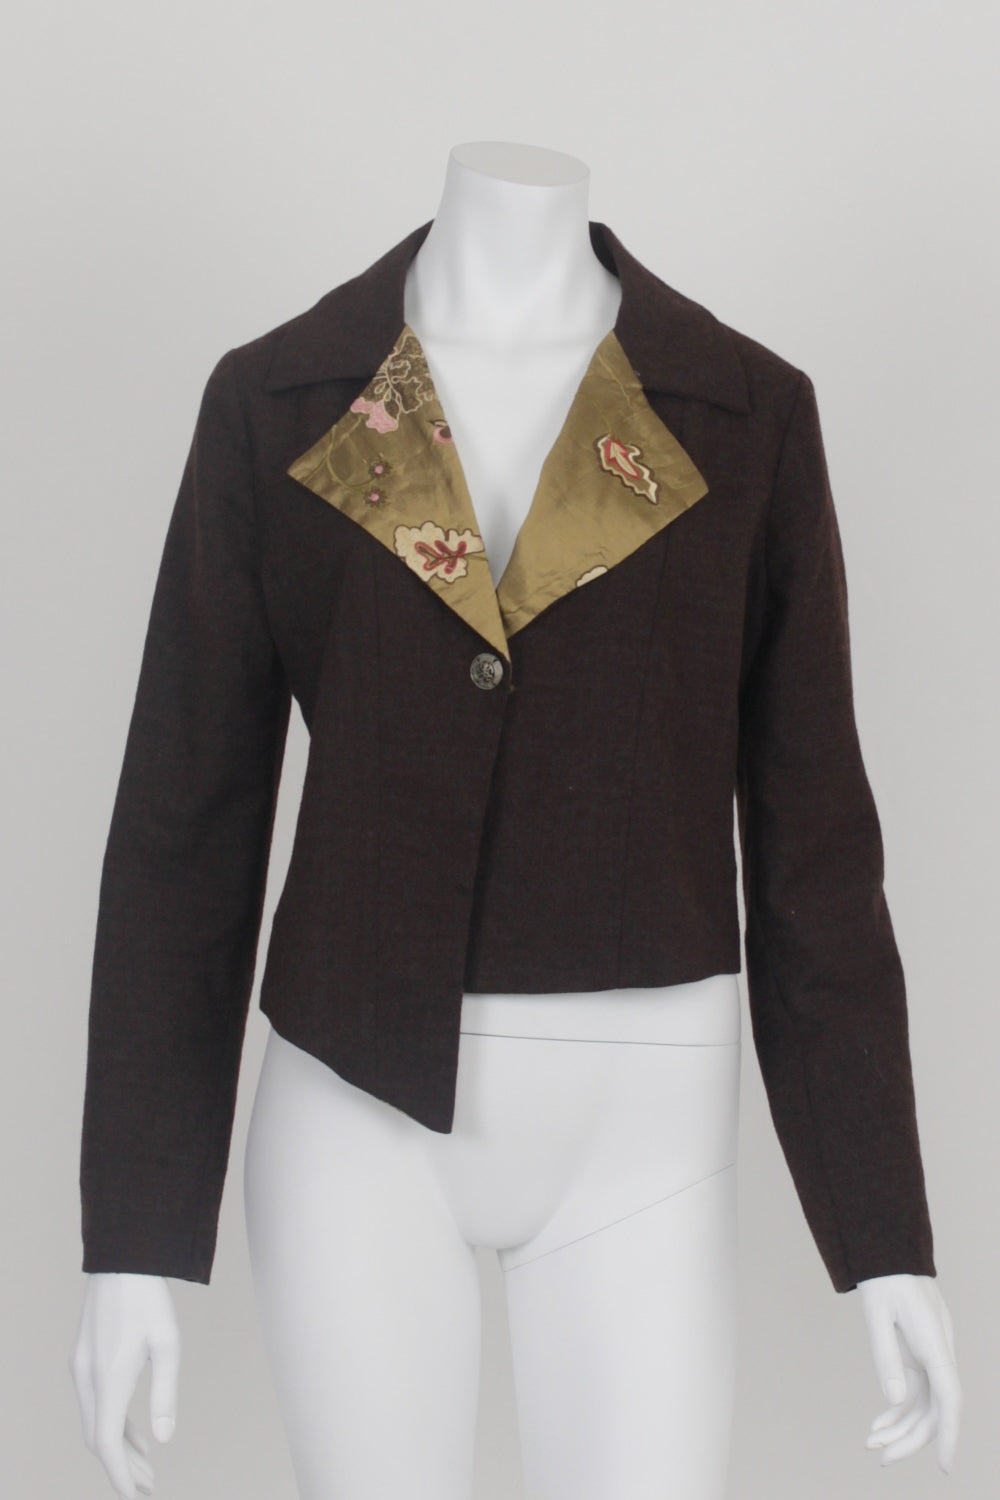 Maddy Petrulis Brown Wool Blend Jacket 12